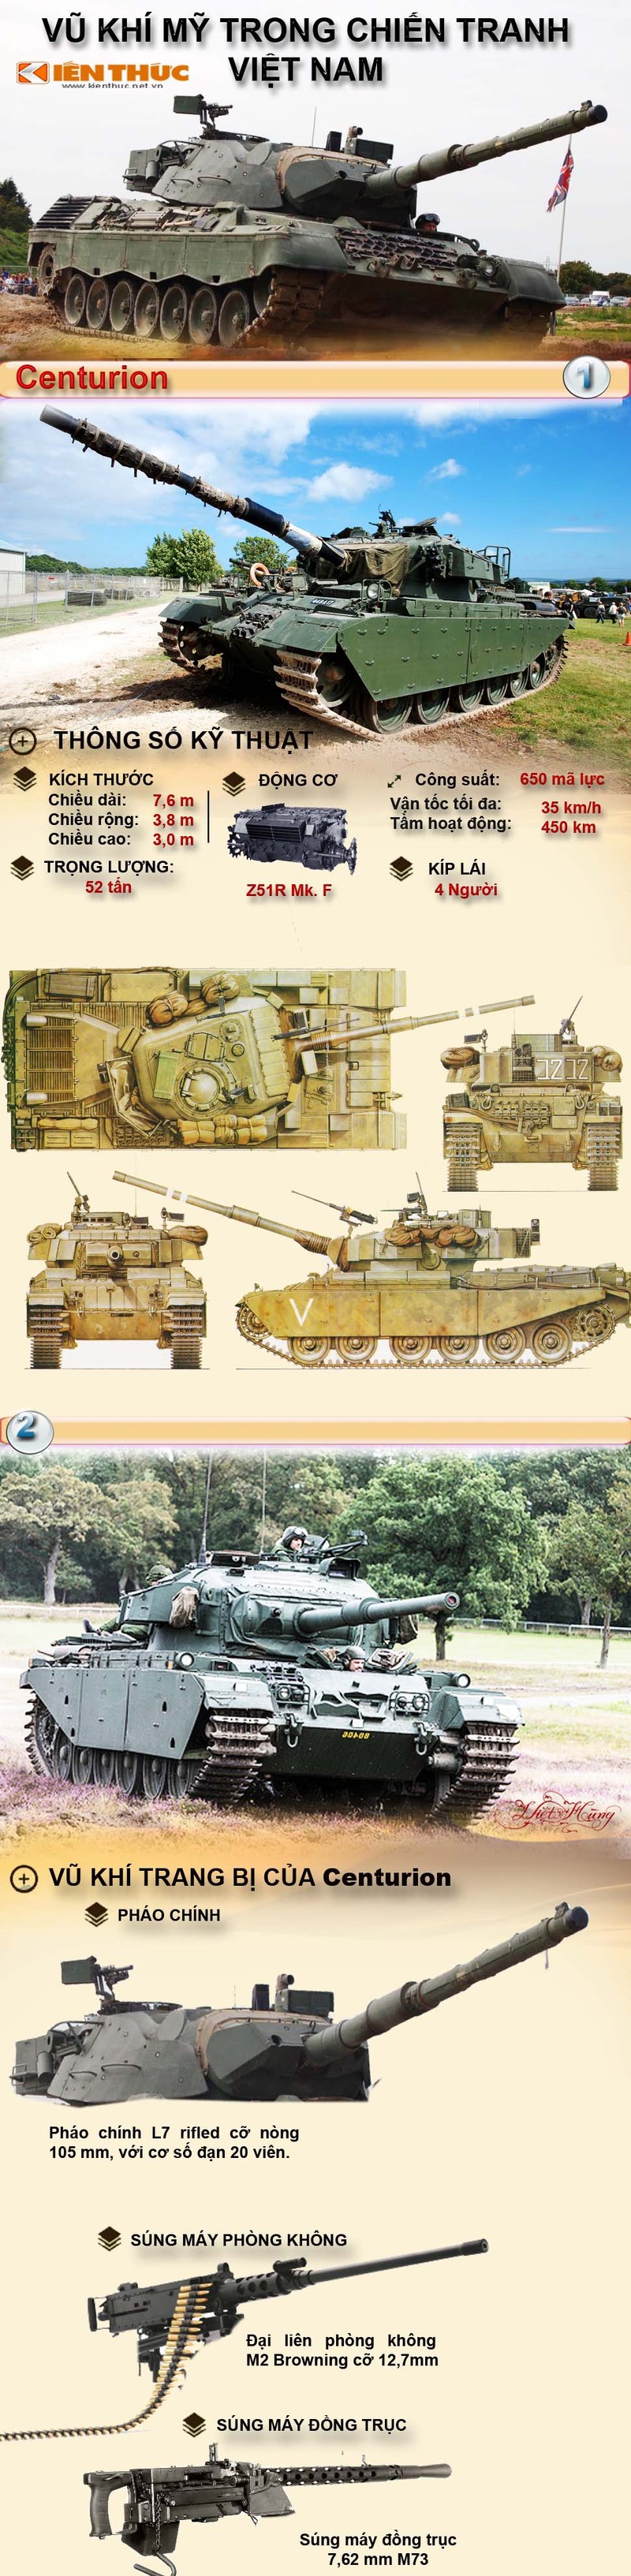 Infographic: Xe tang Centurion trong Chien tranh Viet Nam